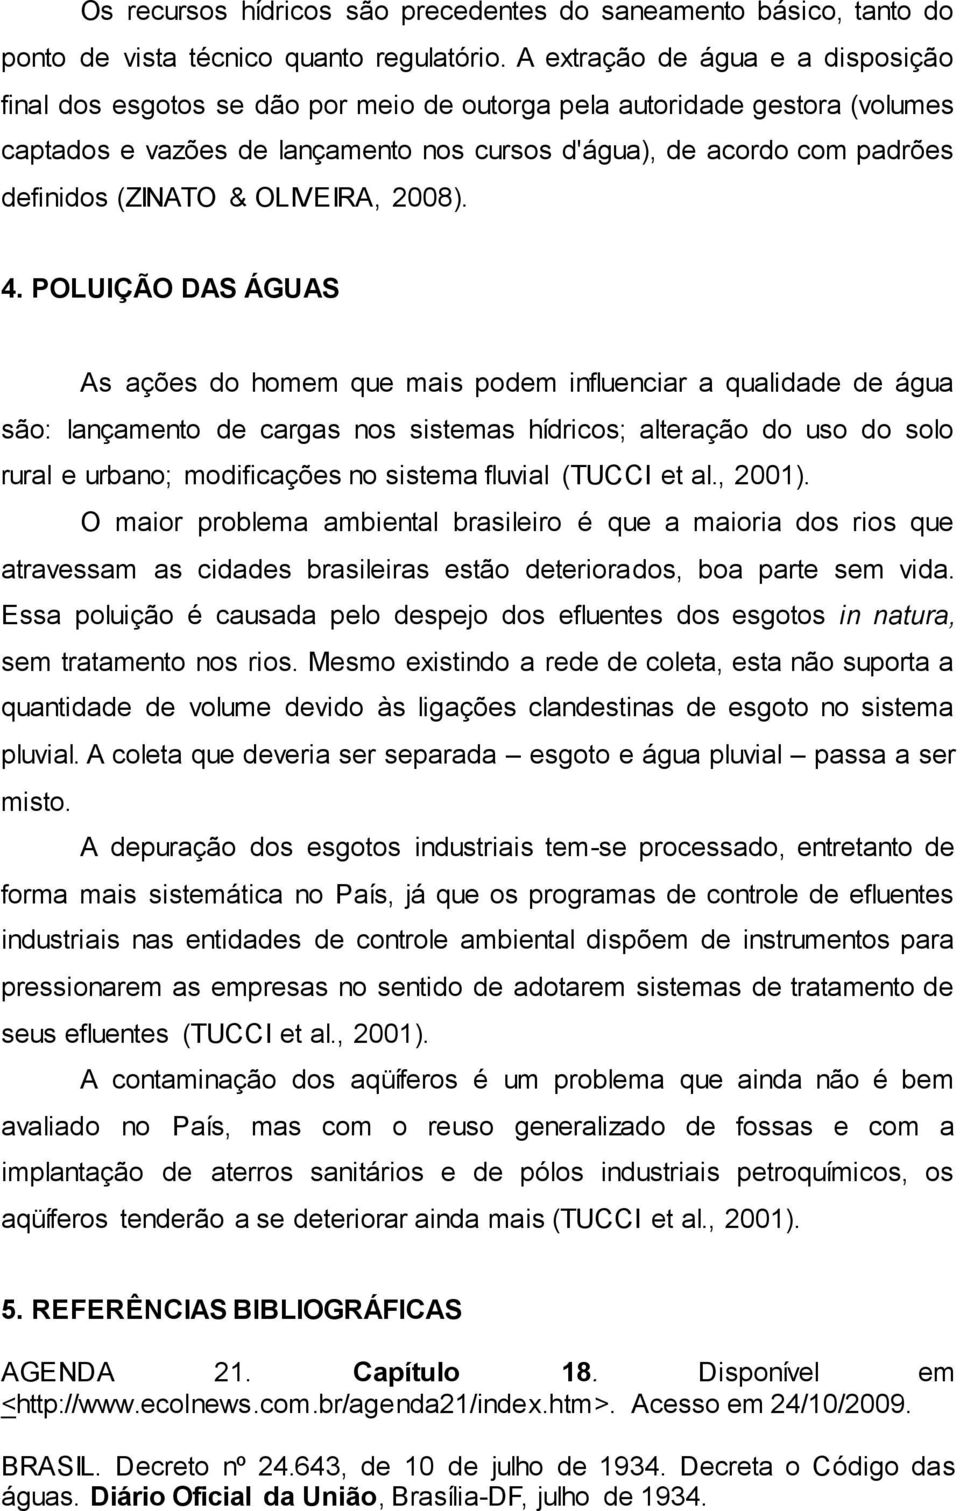 (ZINATO & OLIVEIRA, 2008). 4.